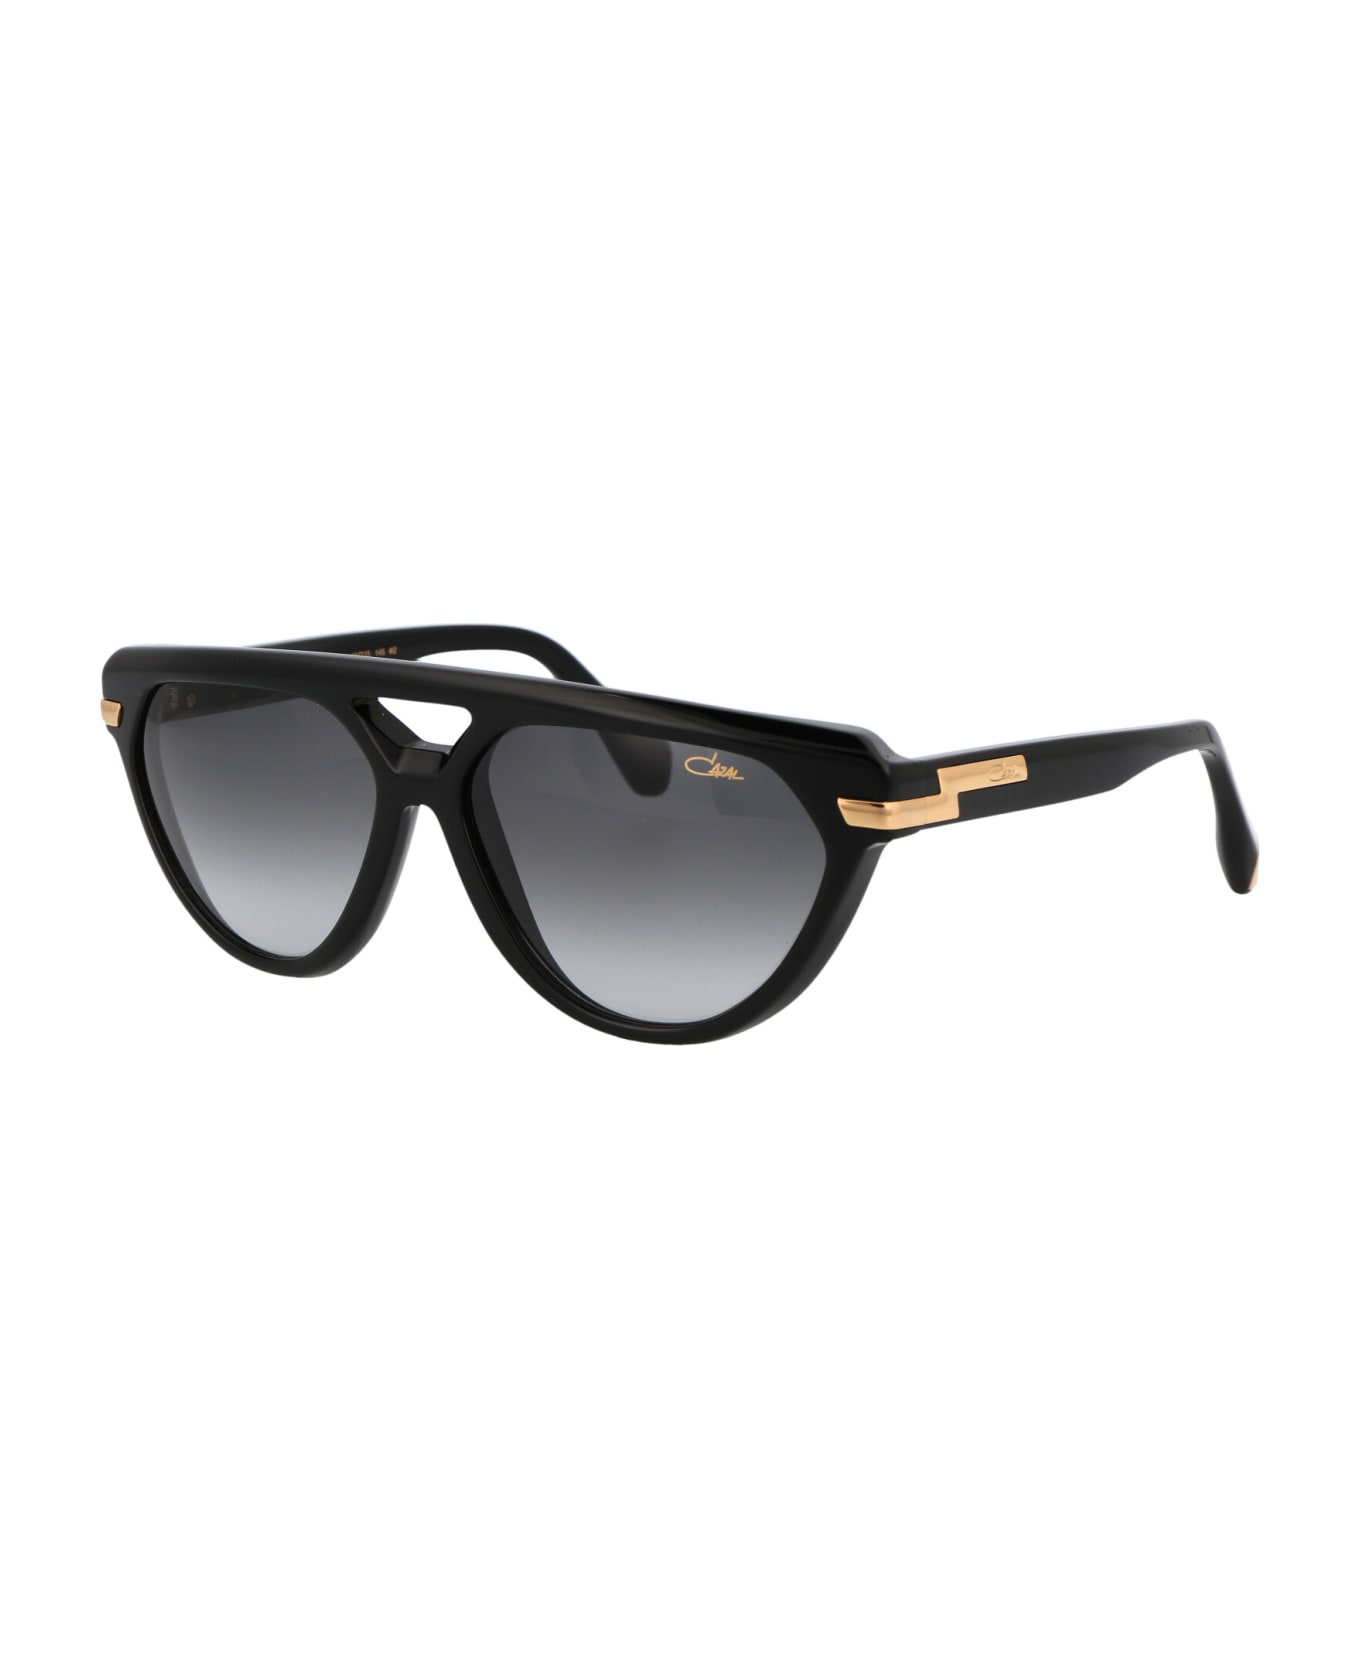 Cazal Mod. 8503 Sunglasses - 001 BLACK